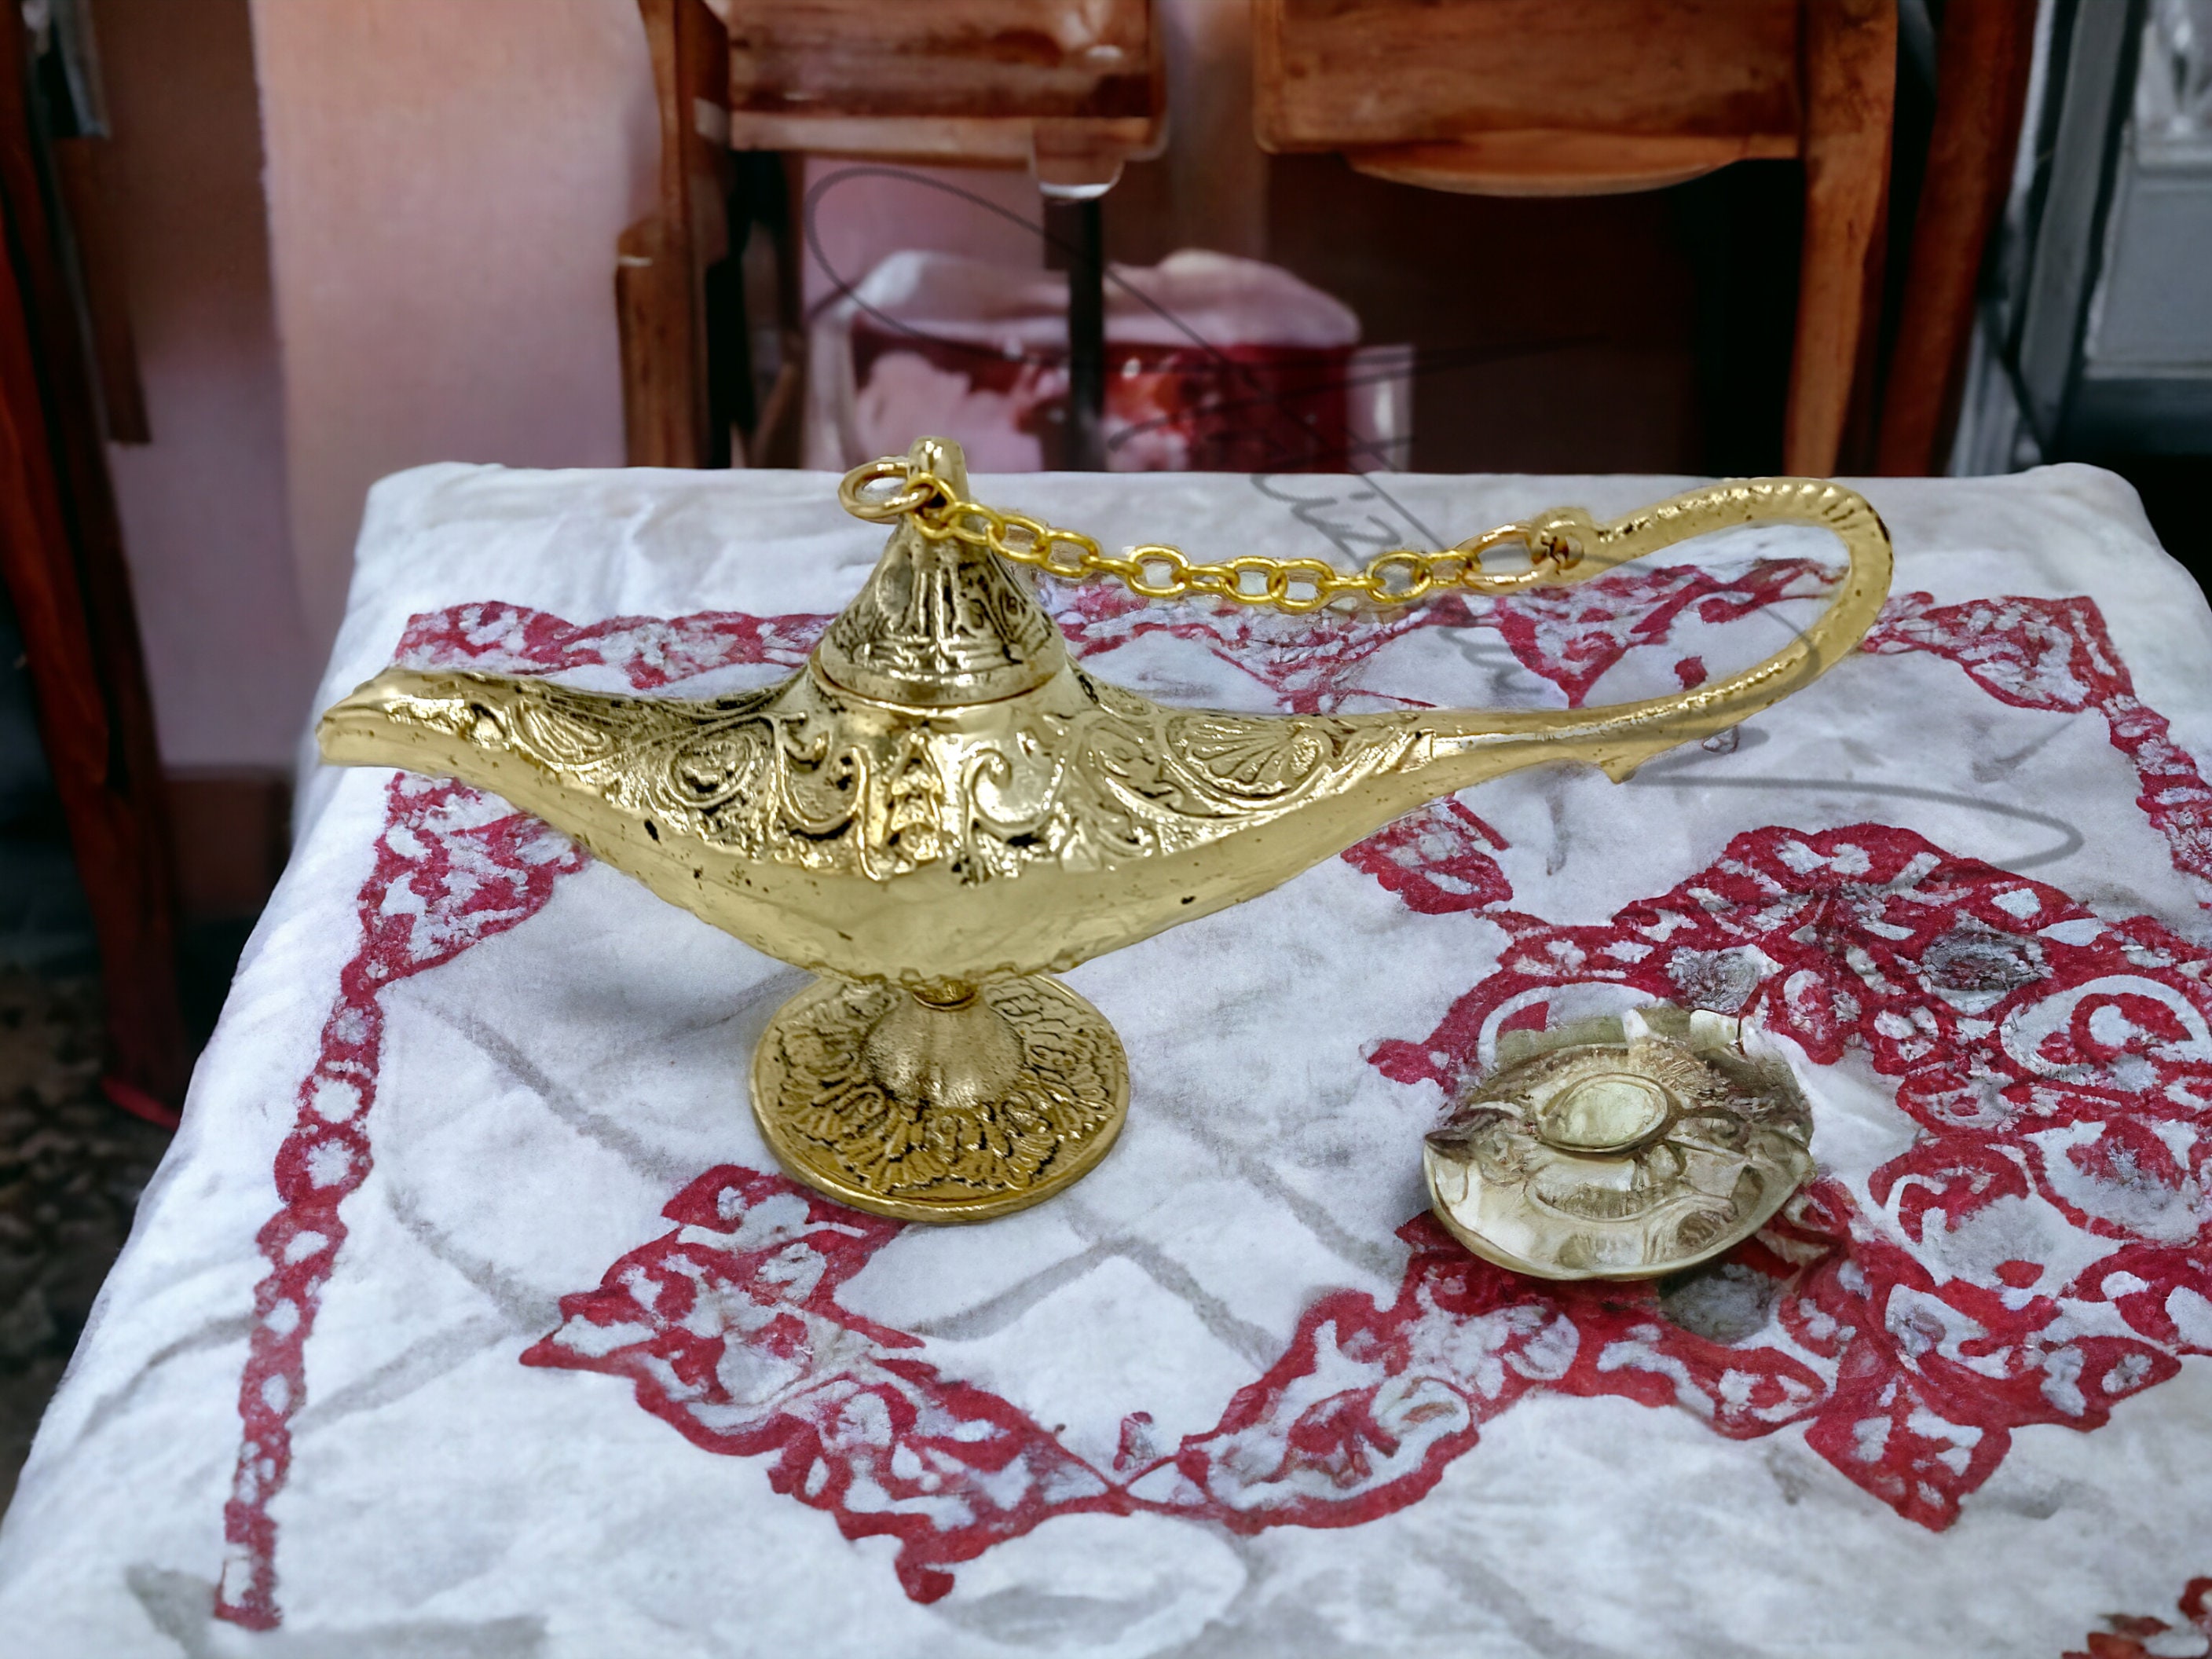 Brass Aladdin Lamp, 6 Inches, Vintage Solid Brass Handmade Aladdin